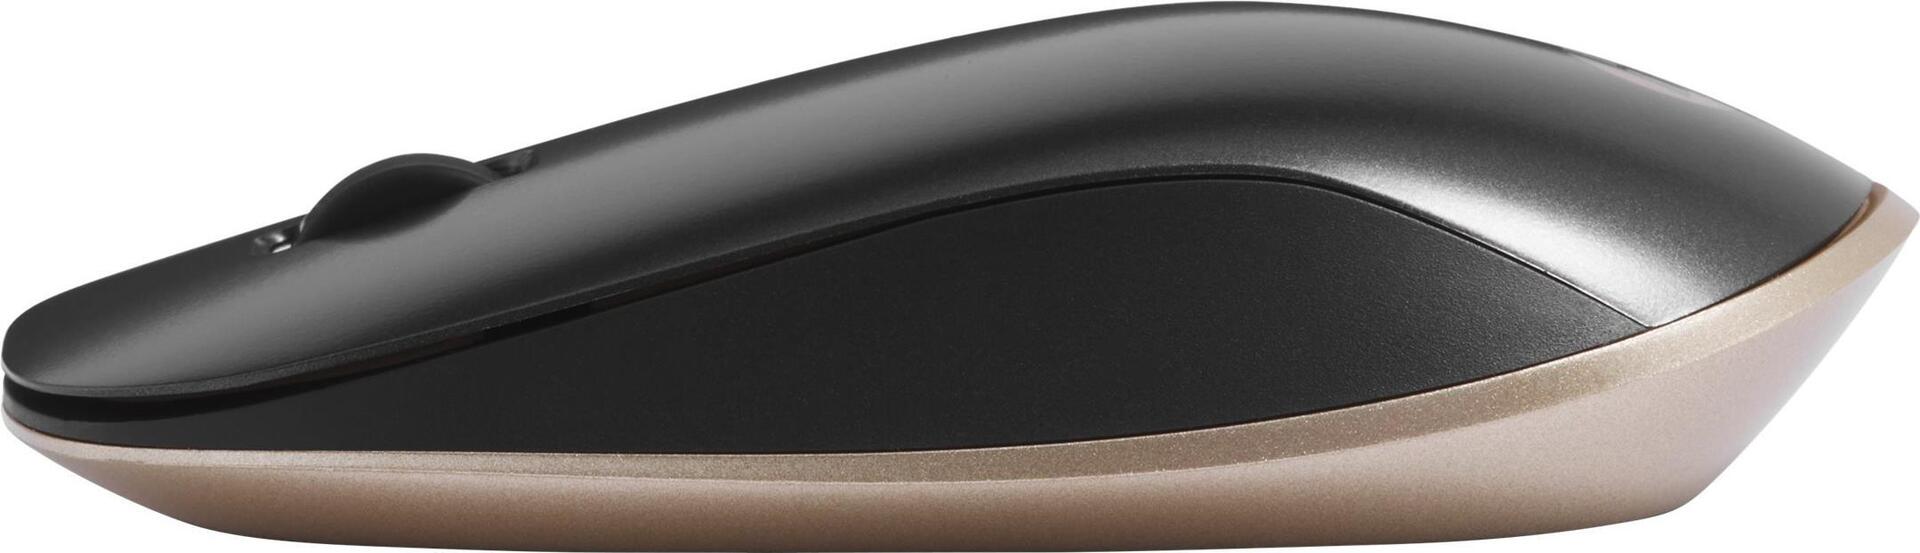 HP 410 Slim Black Bluetooth Mouse (P) (4M0X5AA#ABB)